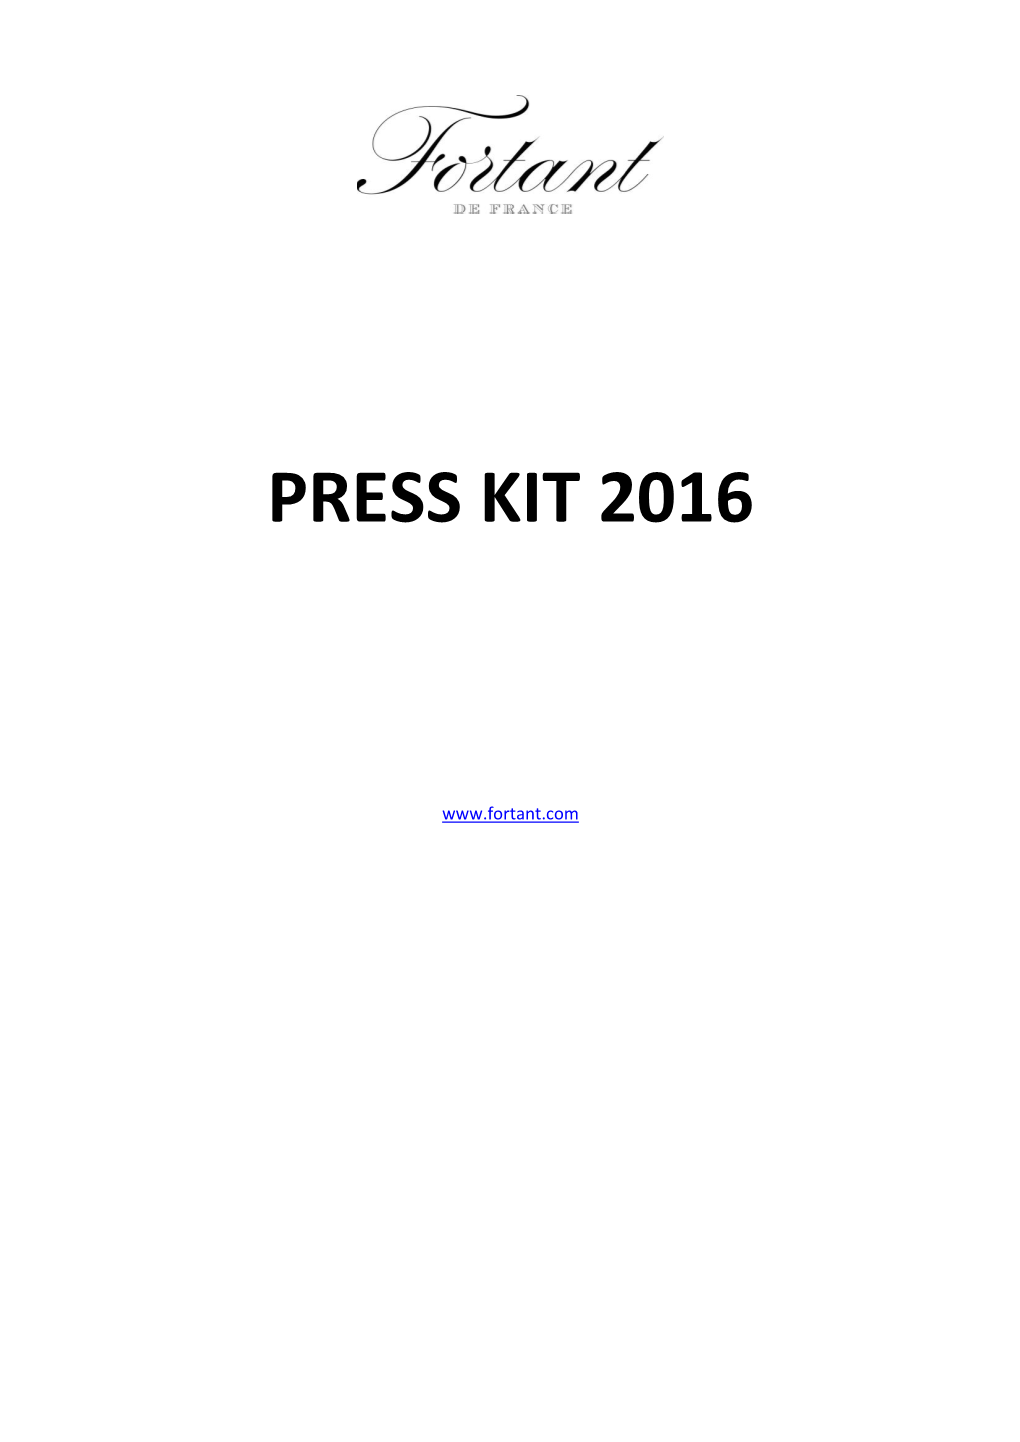 Press Kit 2016